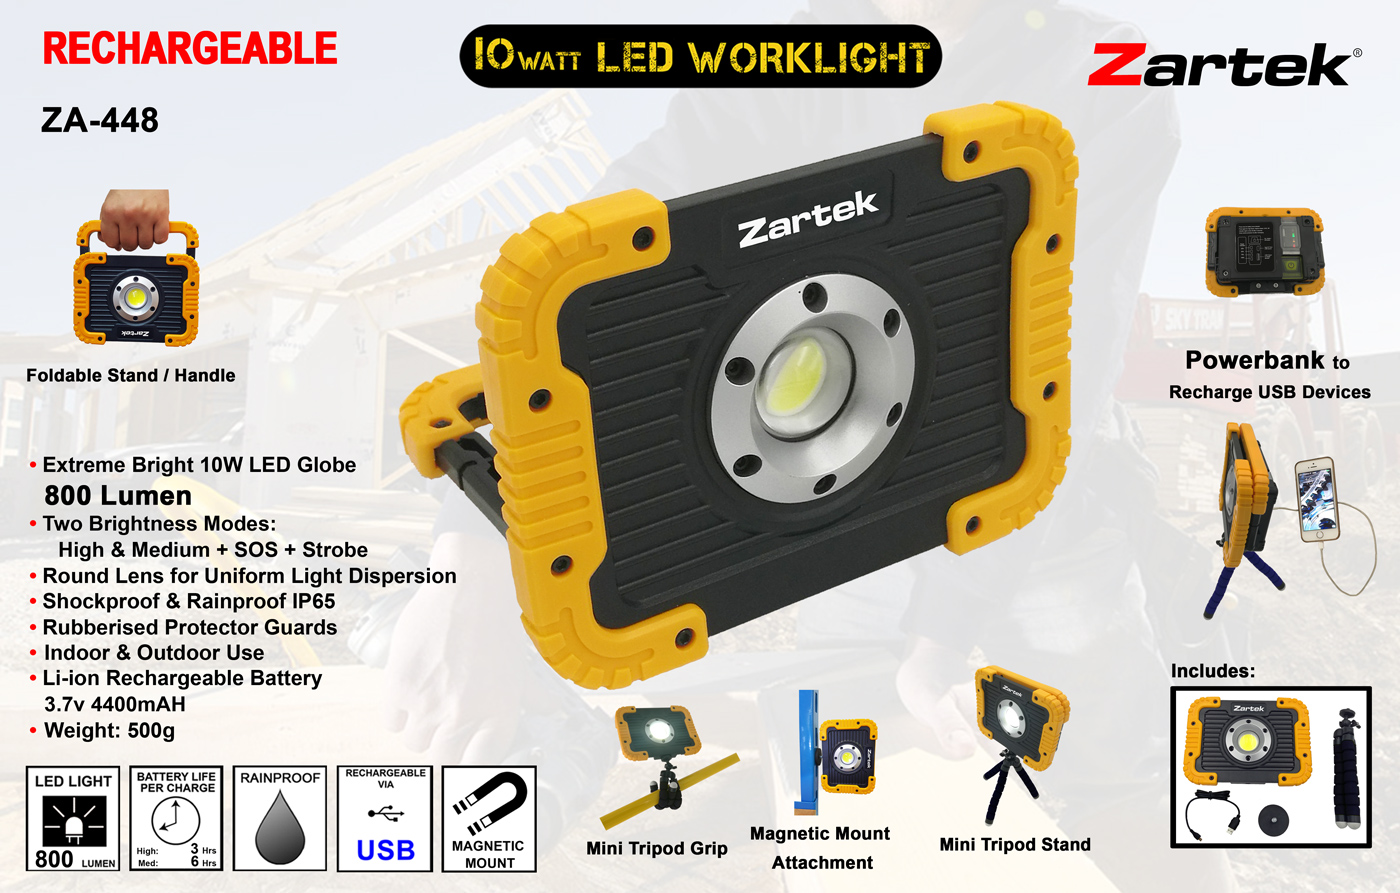 ZarteK USB Rechargeable LED Worklight 10 Watt with Powerb